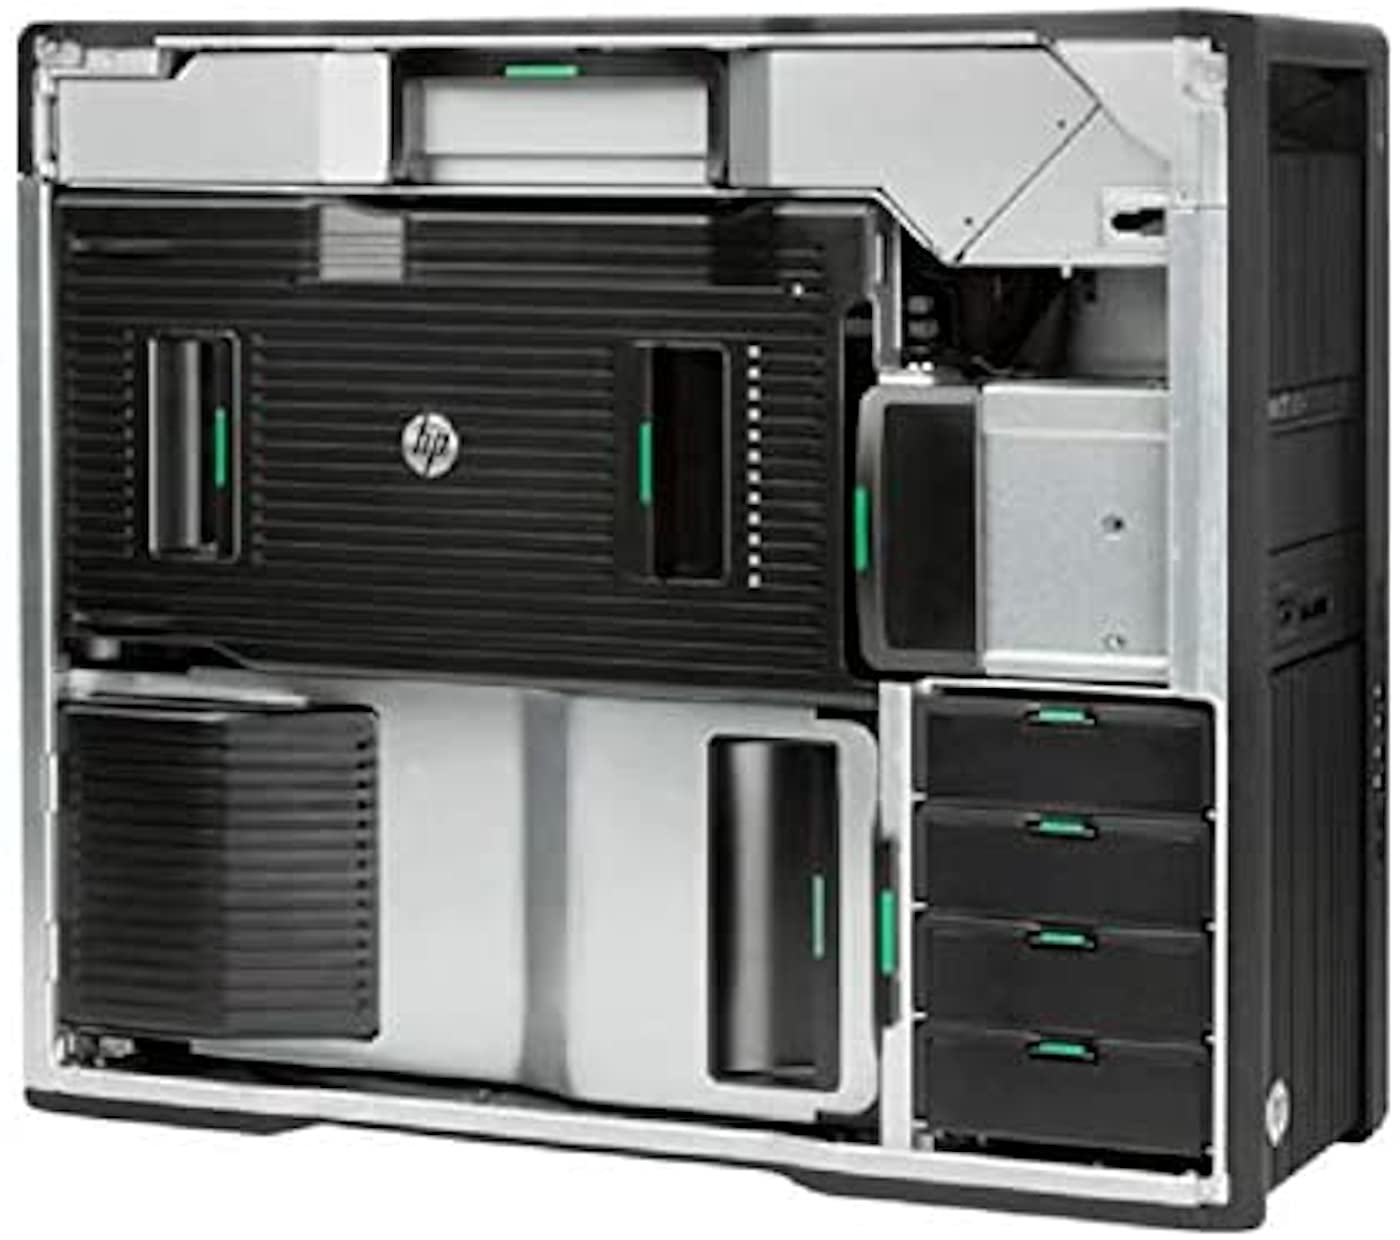 HP Z840 Workstation, 2X Intel Xeon E5-2678 v3 up to 3.1GHz (24 Cores Total), 512GB DDR4, 4X 1TB SSD, Quadro M4000 8GB (4X Display Ports), USB 3.0, Windows 10 Professional 64-bit (Renewed)